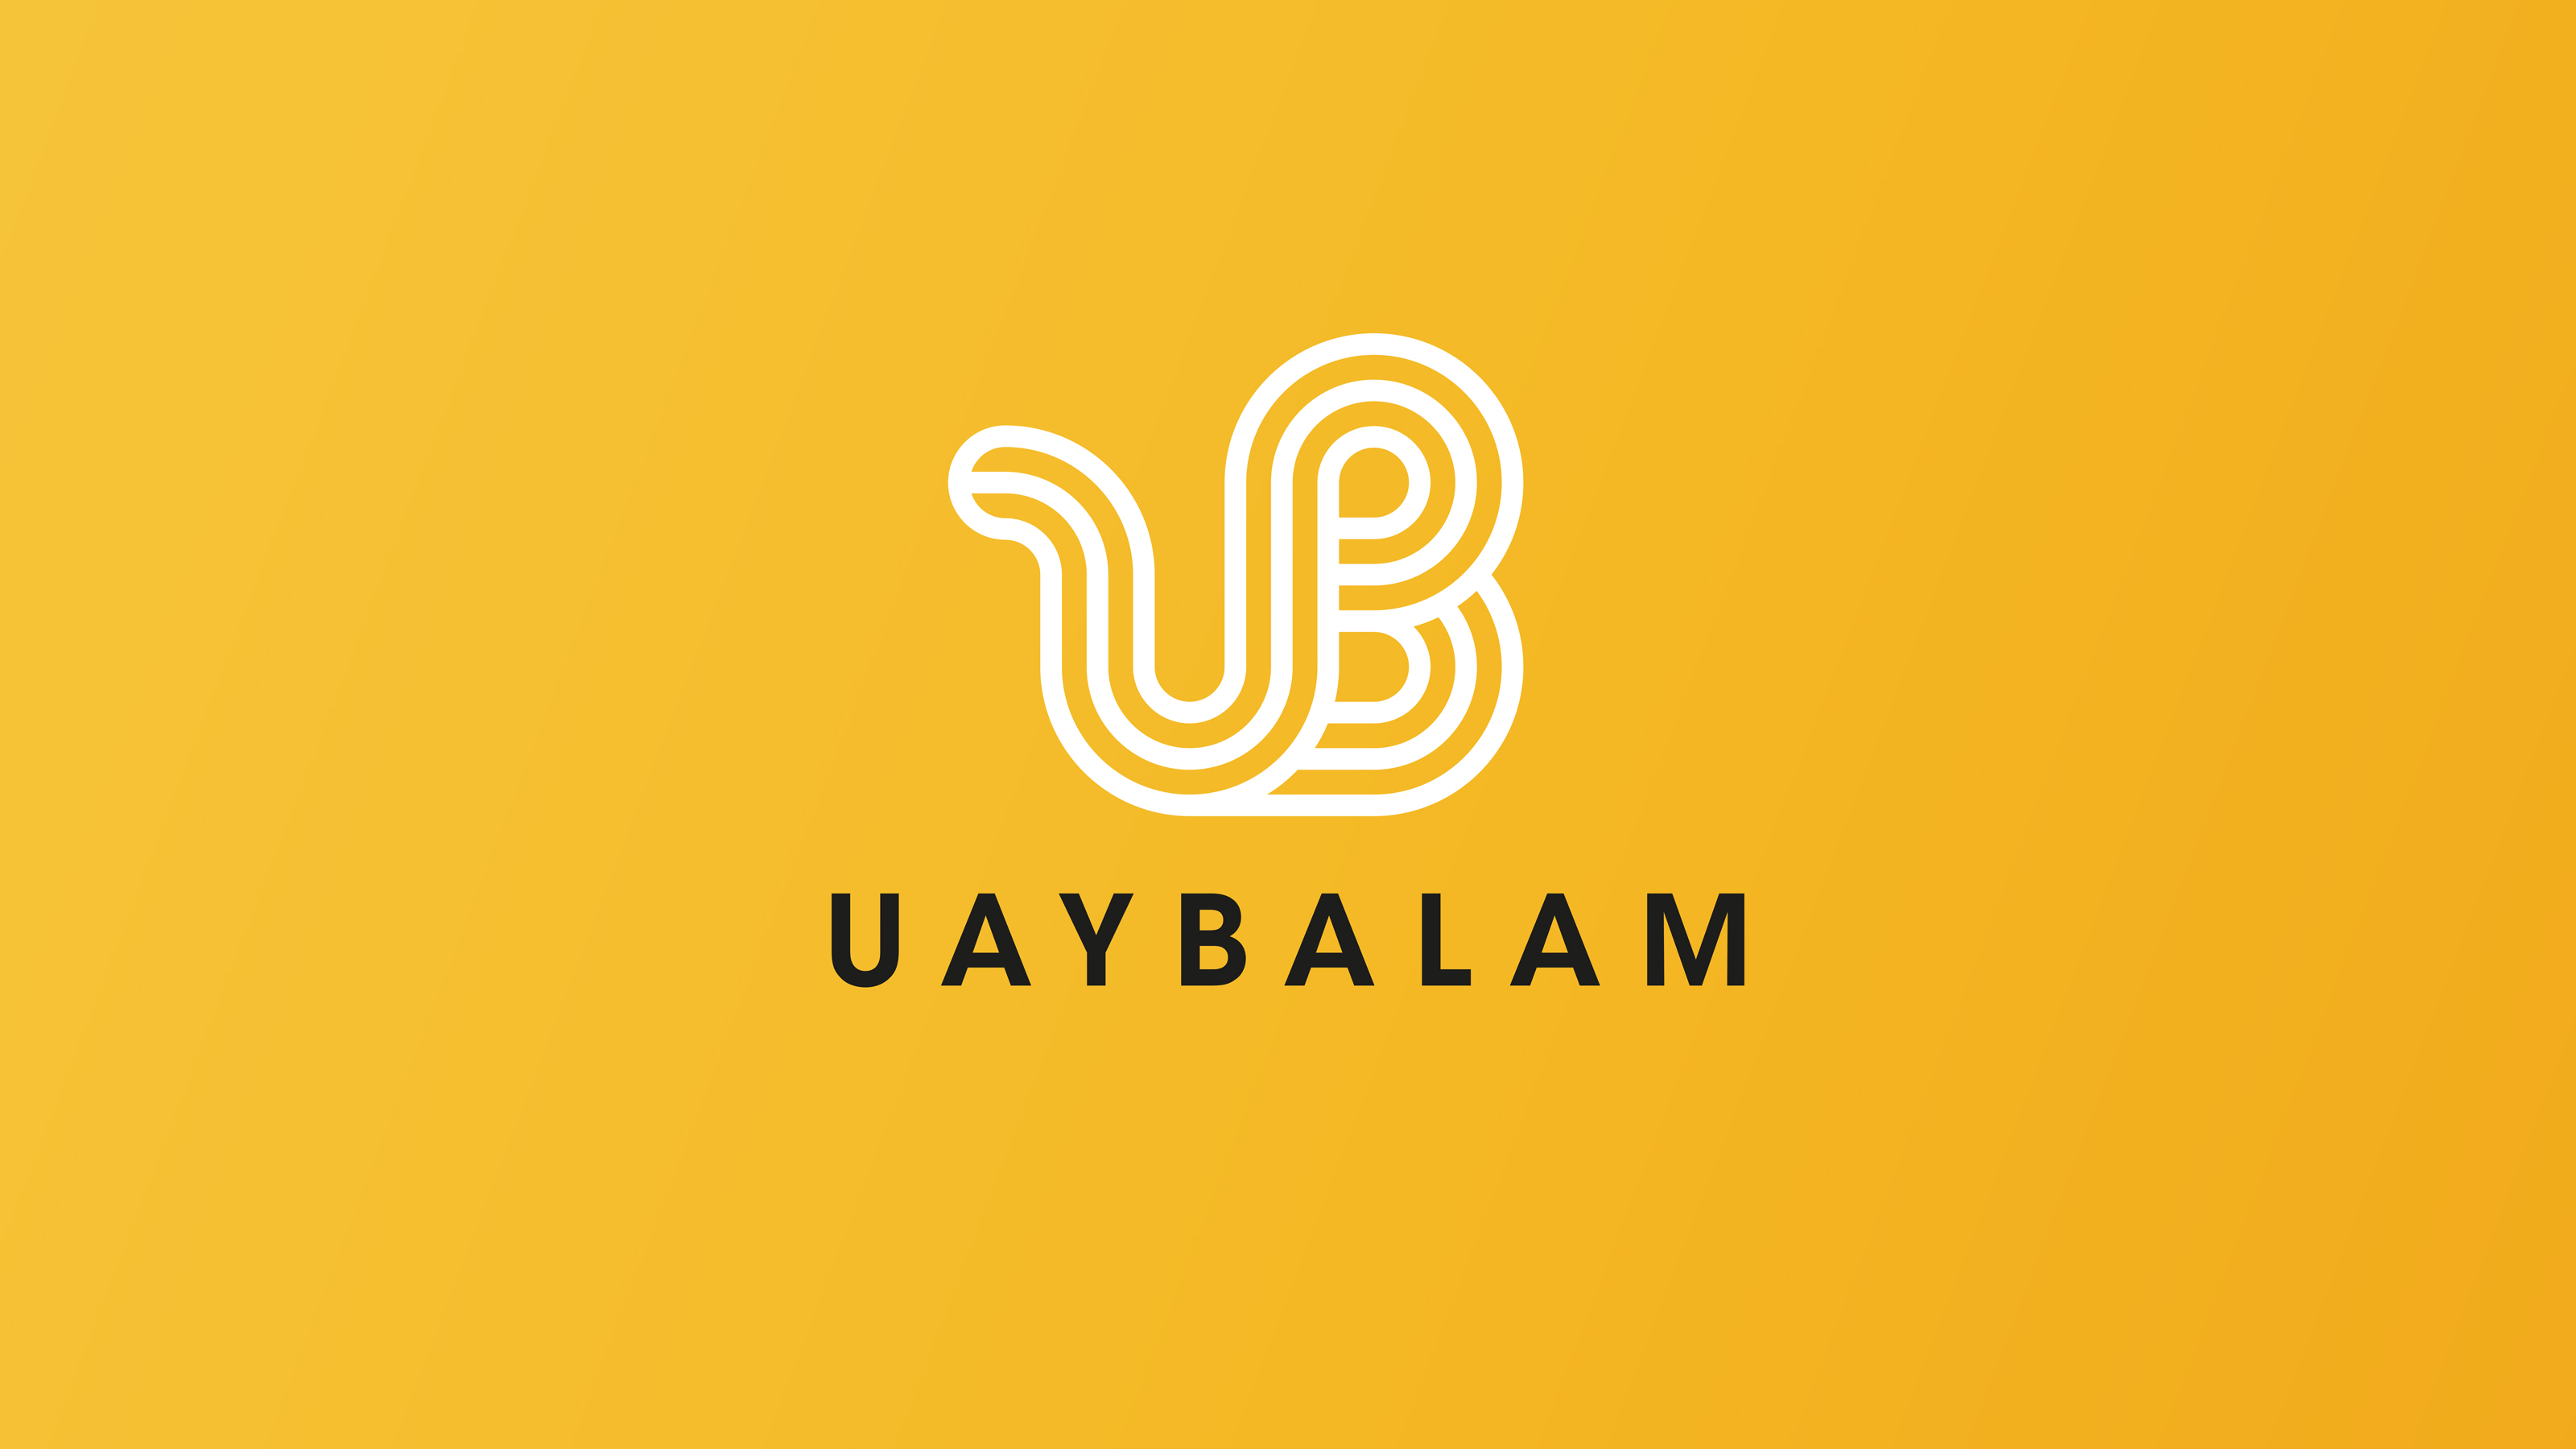 Uay Balam by Alucina - Creative Work - $i